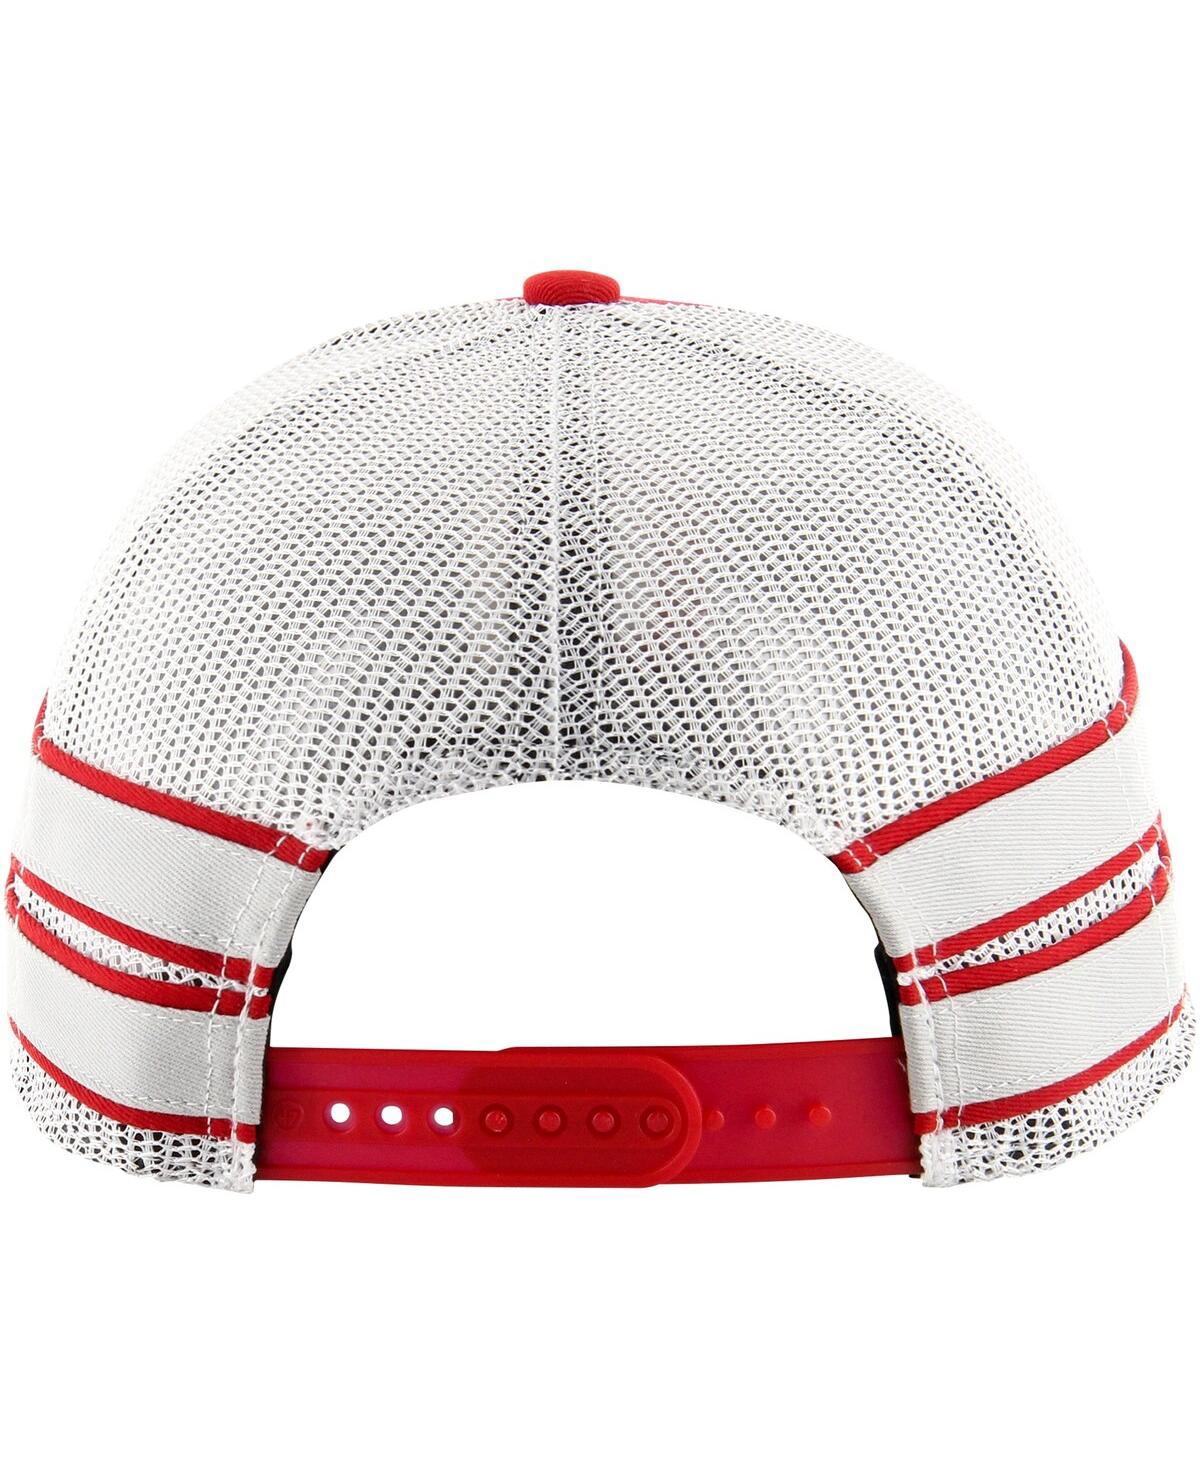 Shop 47 Brand Men's ' Scarlet Distressed Ohio State Buckeyes Straight Eight Adjustable Trucker Hat